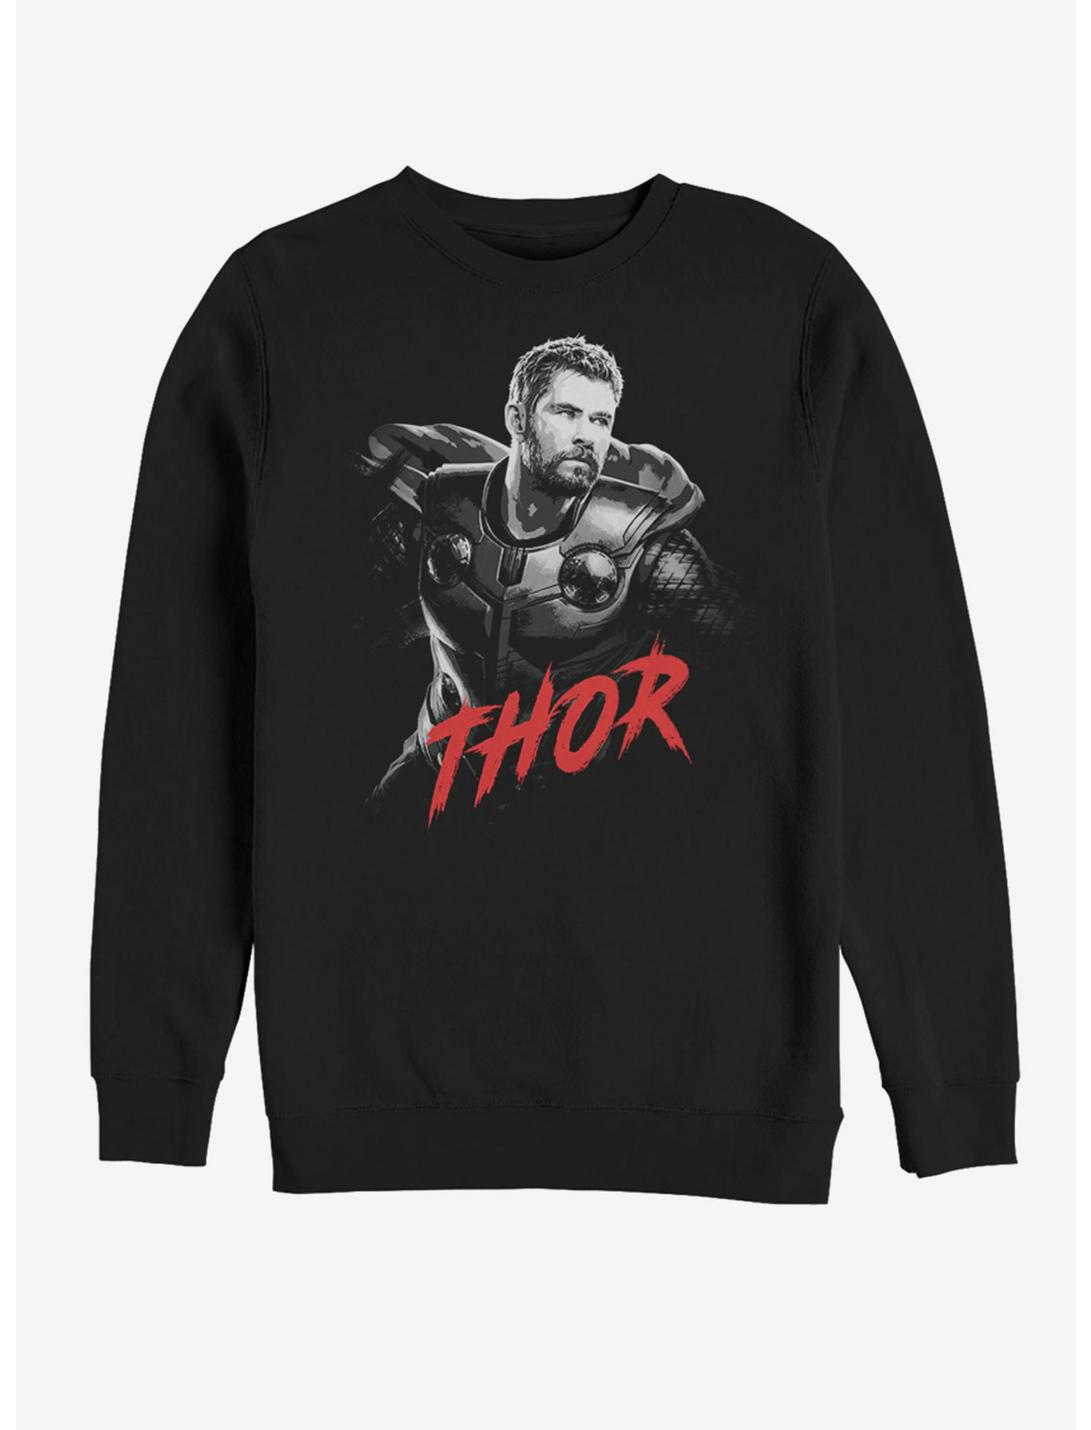 Marvel Avengers: Endgame High Contrast Thor Sweatshirt, BLACK, hi-res